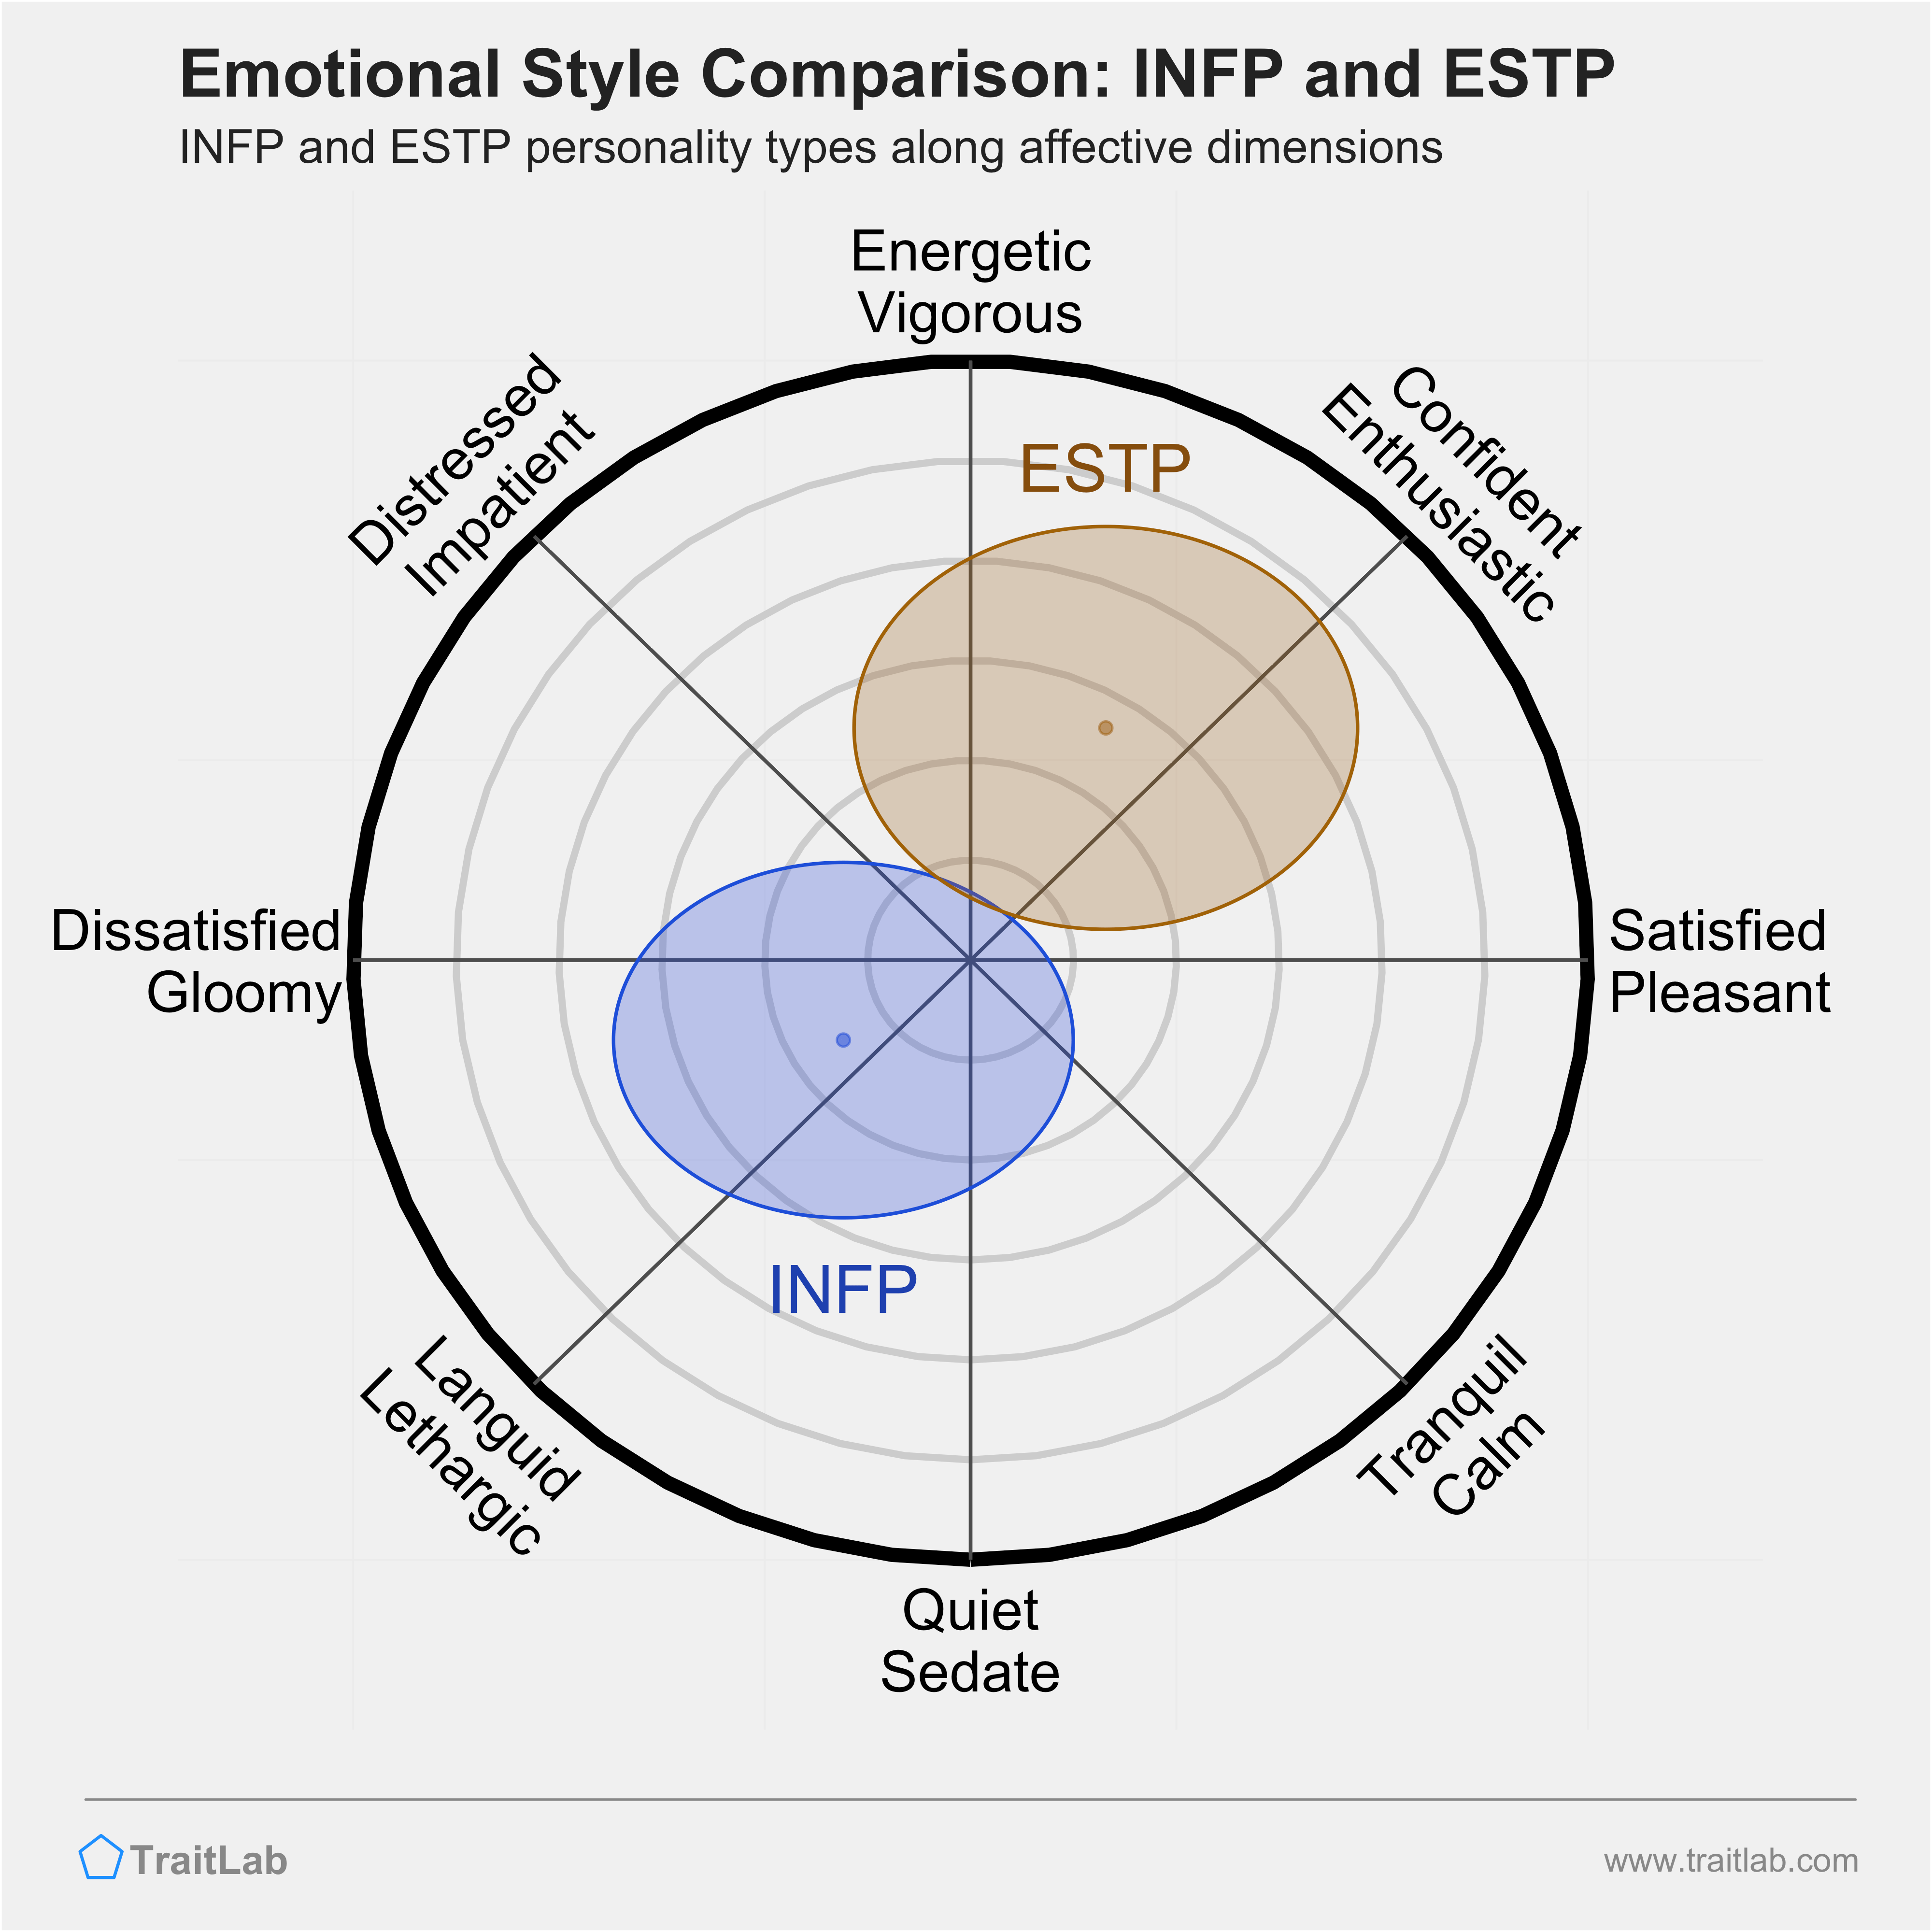 INFP and ESTP comparison across emotional (affective) dimensions